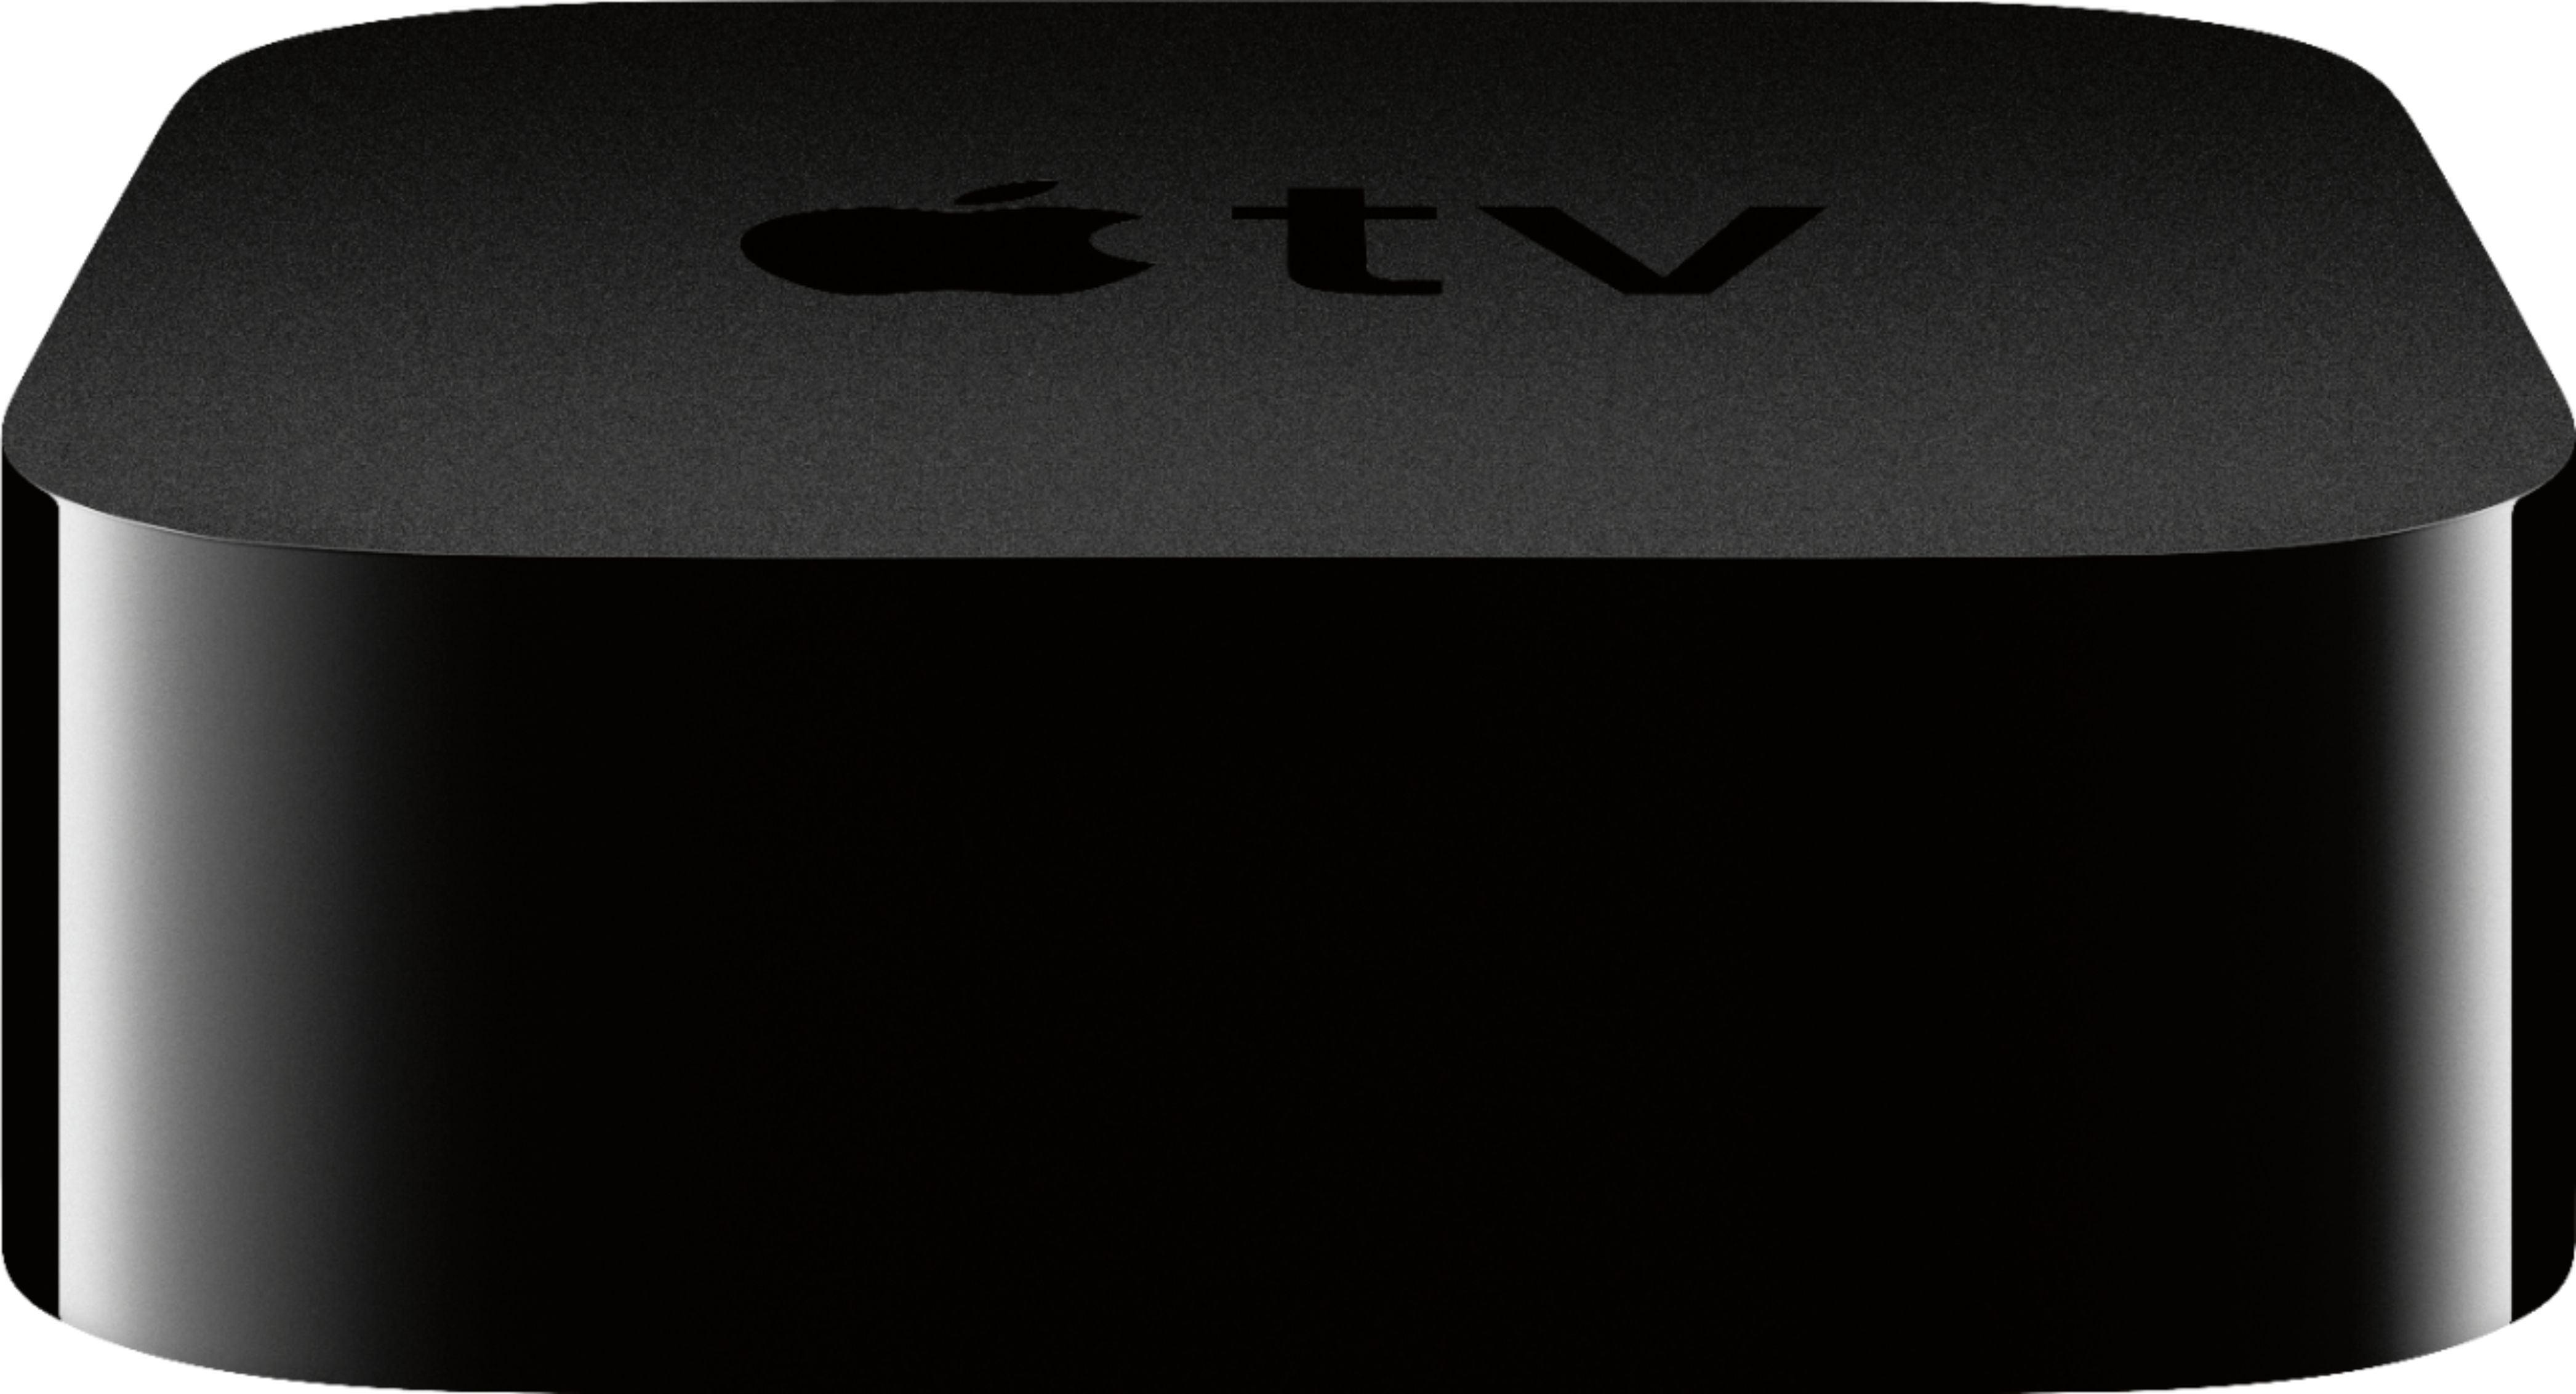 Best Buy: Apple TV 4K 32GB Black MQD22LL/A